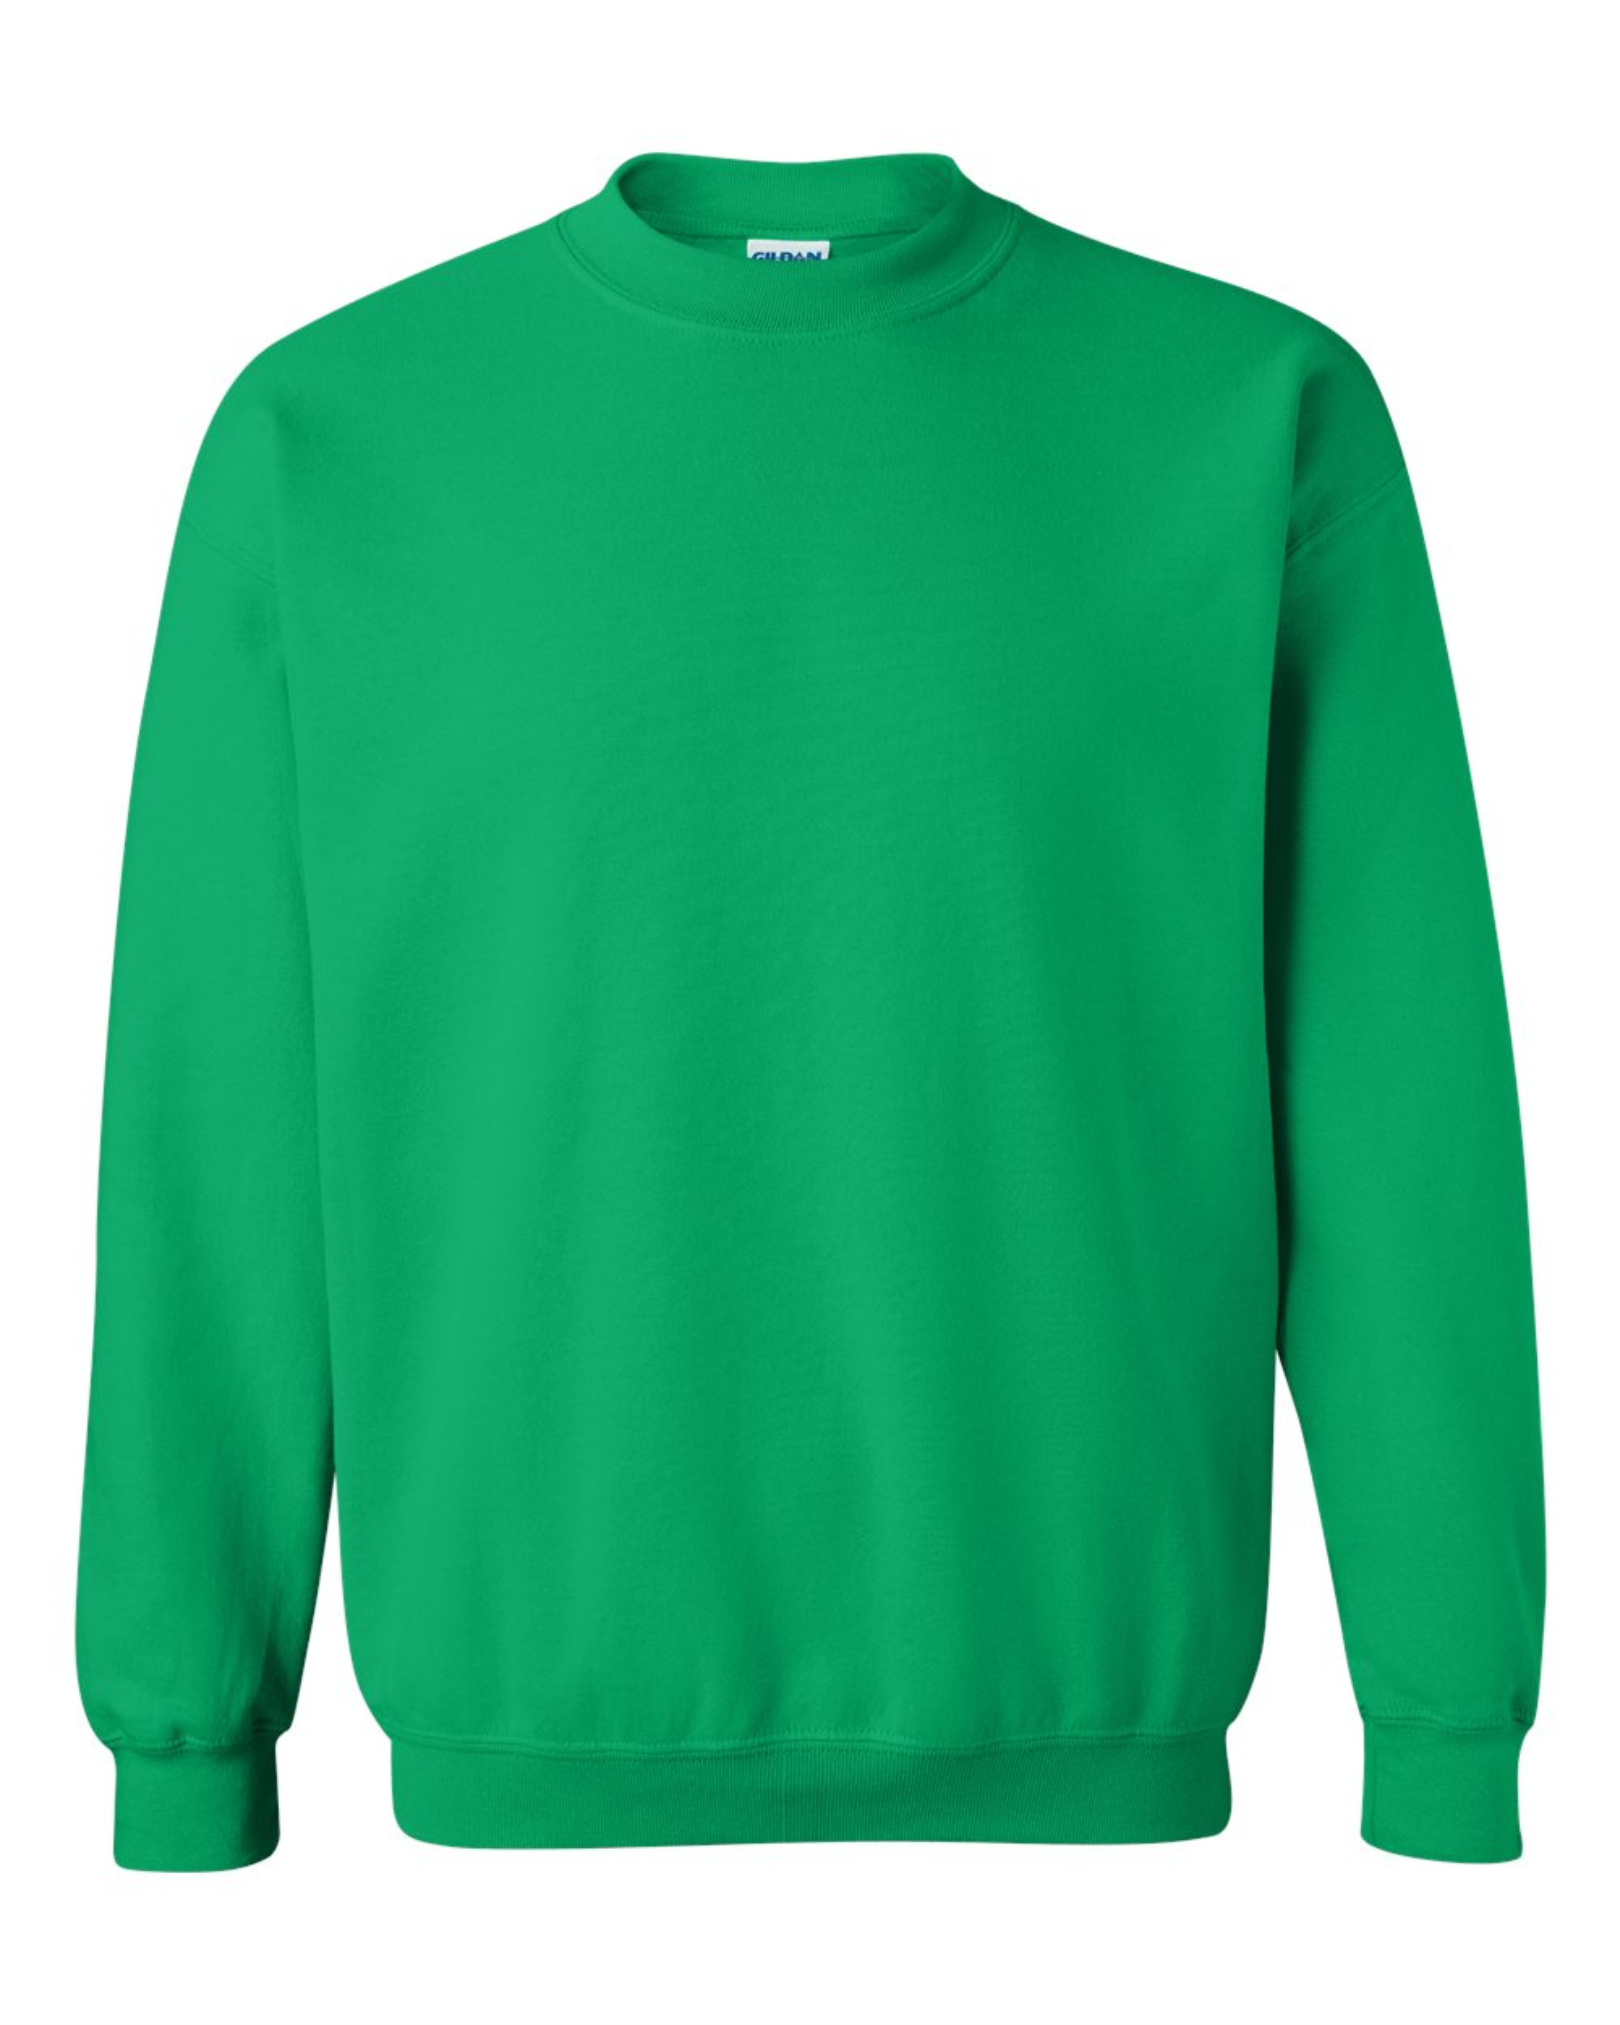 Adult Crewneck Sweatshirt - Cotton Irish Green